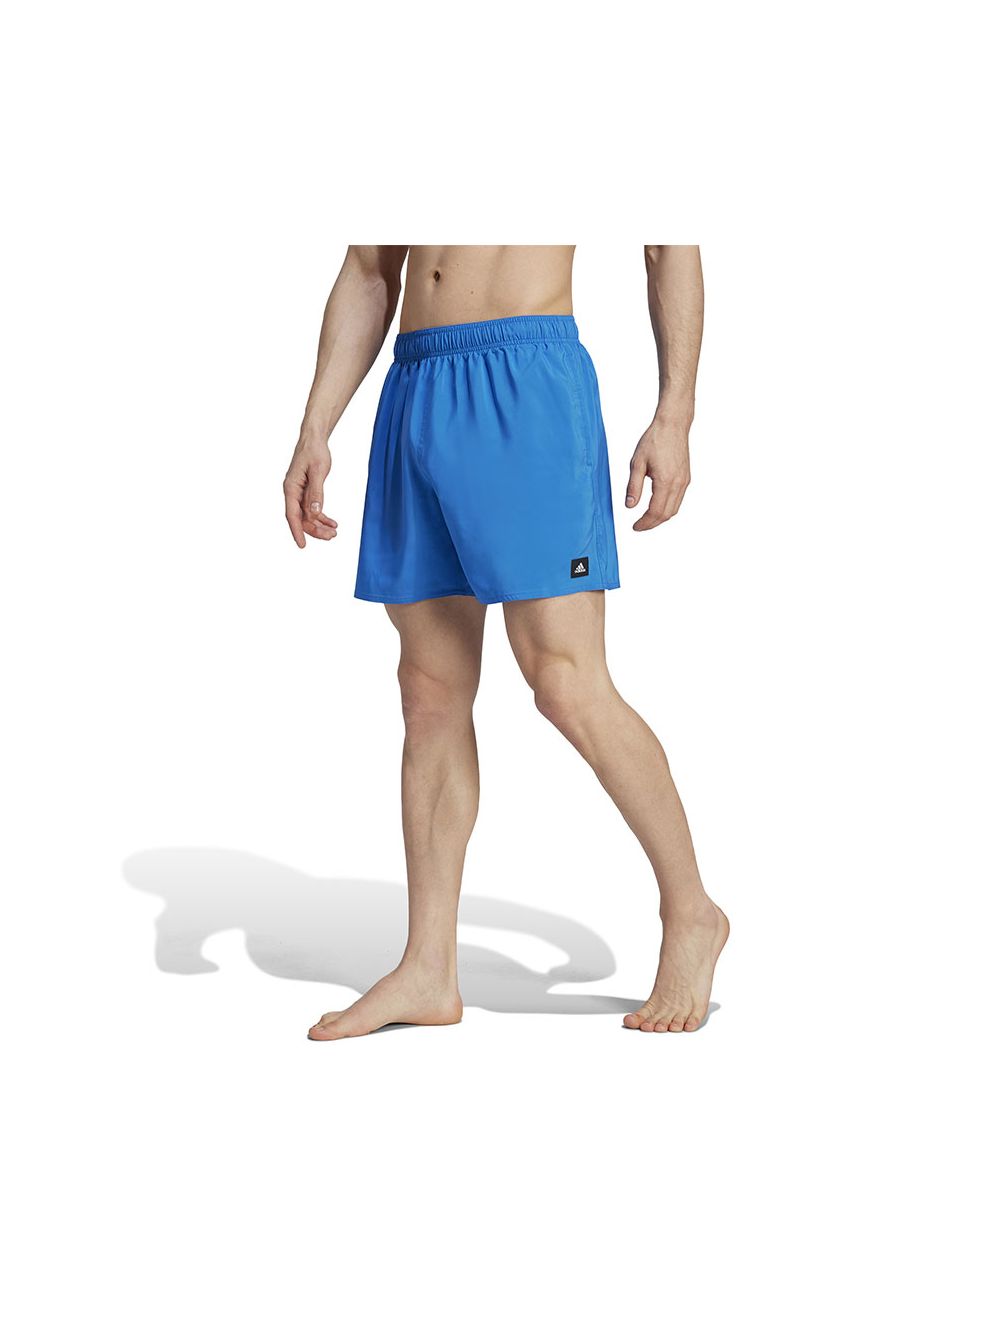 Short Swim Solid Shorts adidas Shop Royal Performance -Length CLX